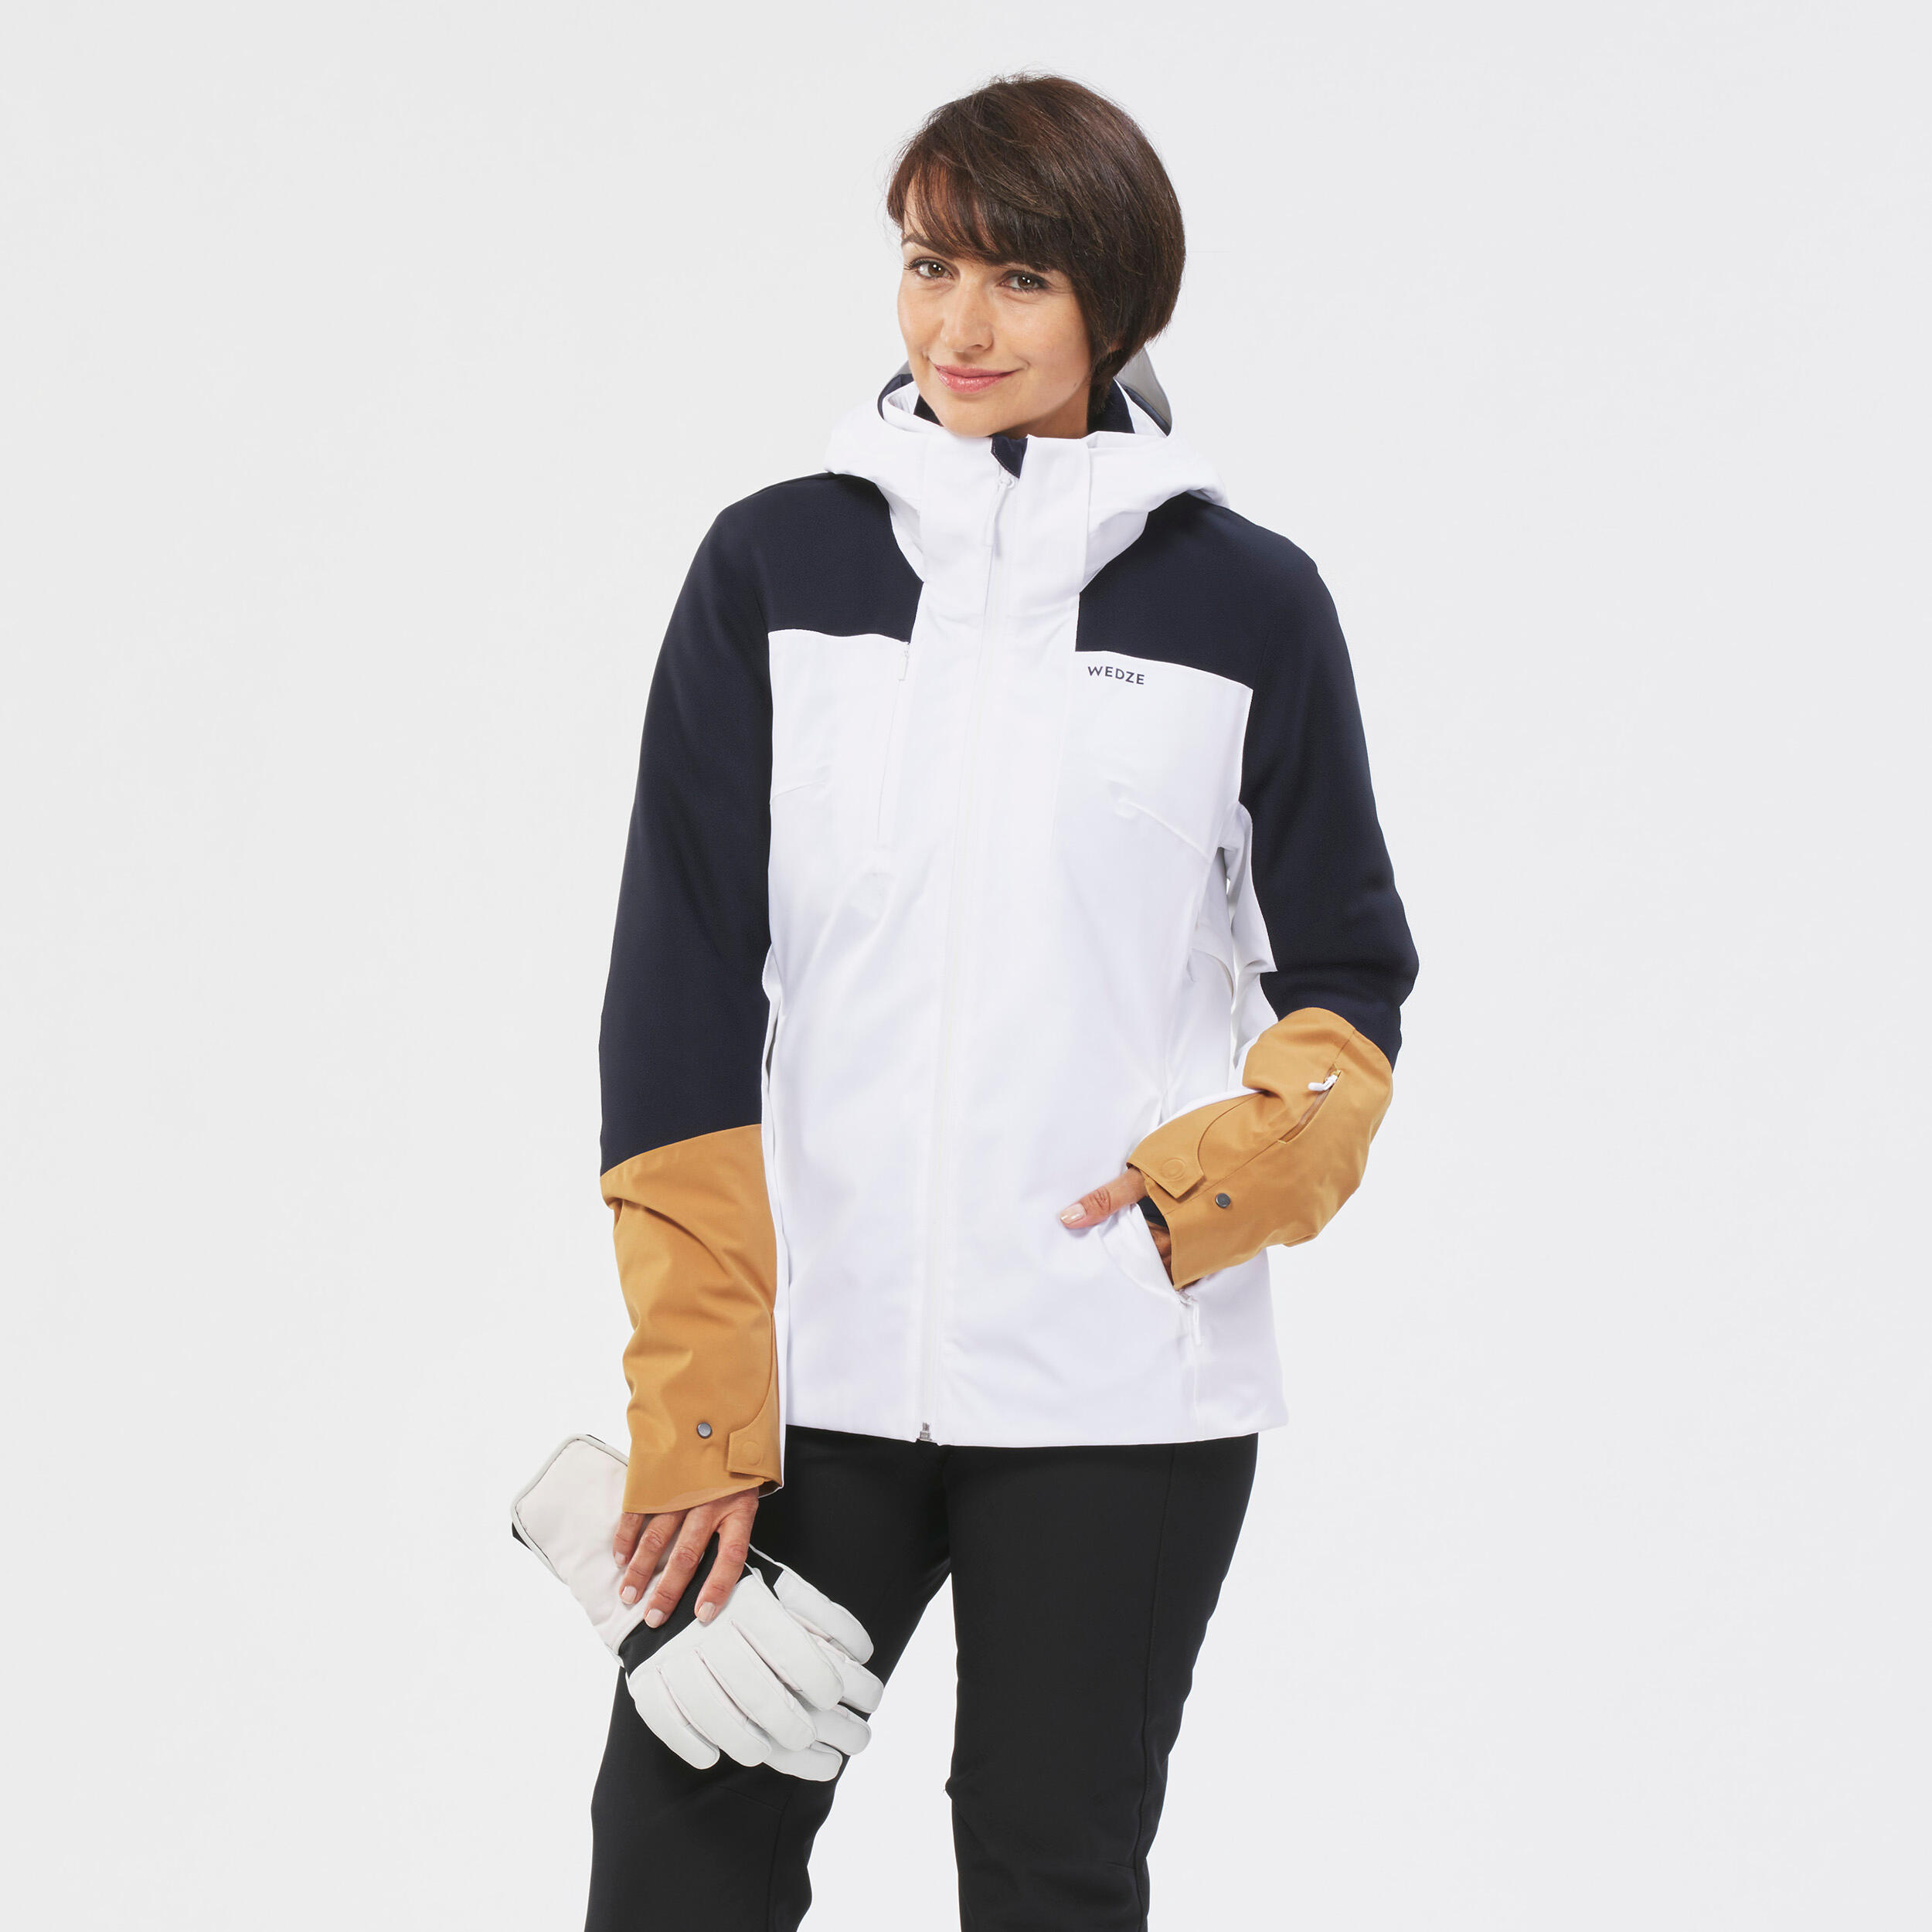 WEDZE Women’s Ski Jacket 500 sport - white/navy/brown